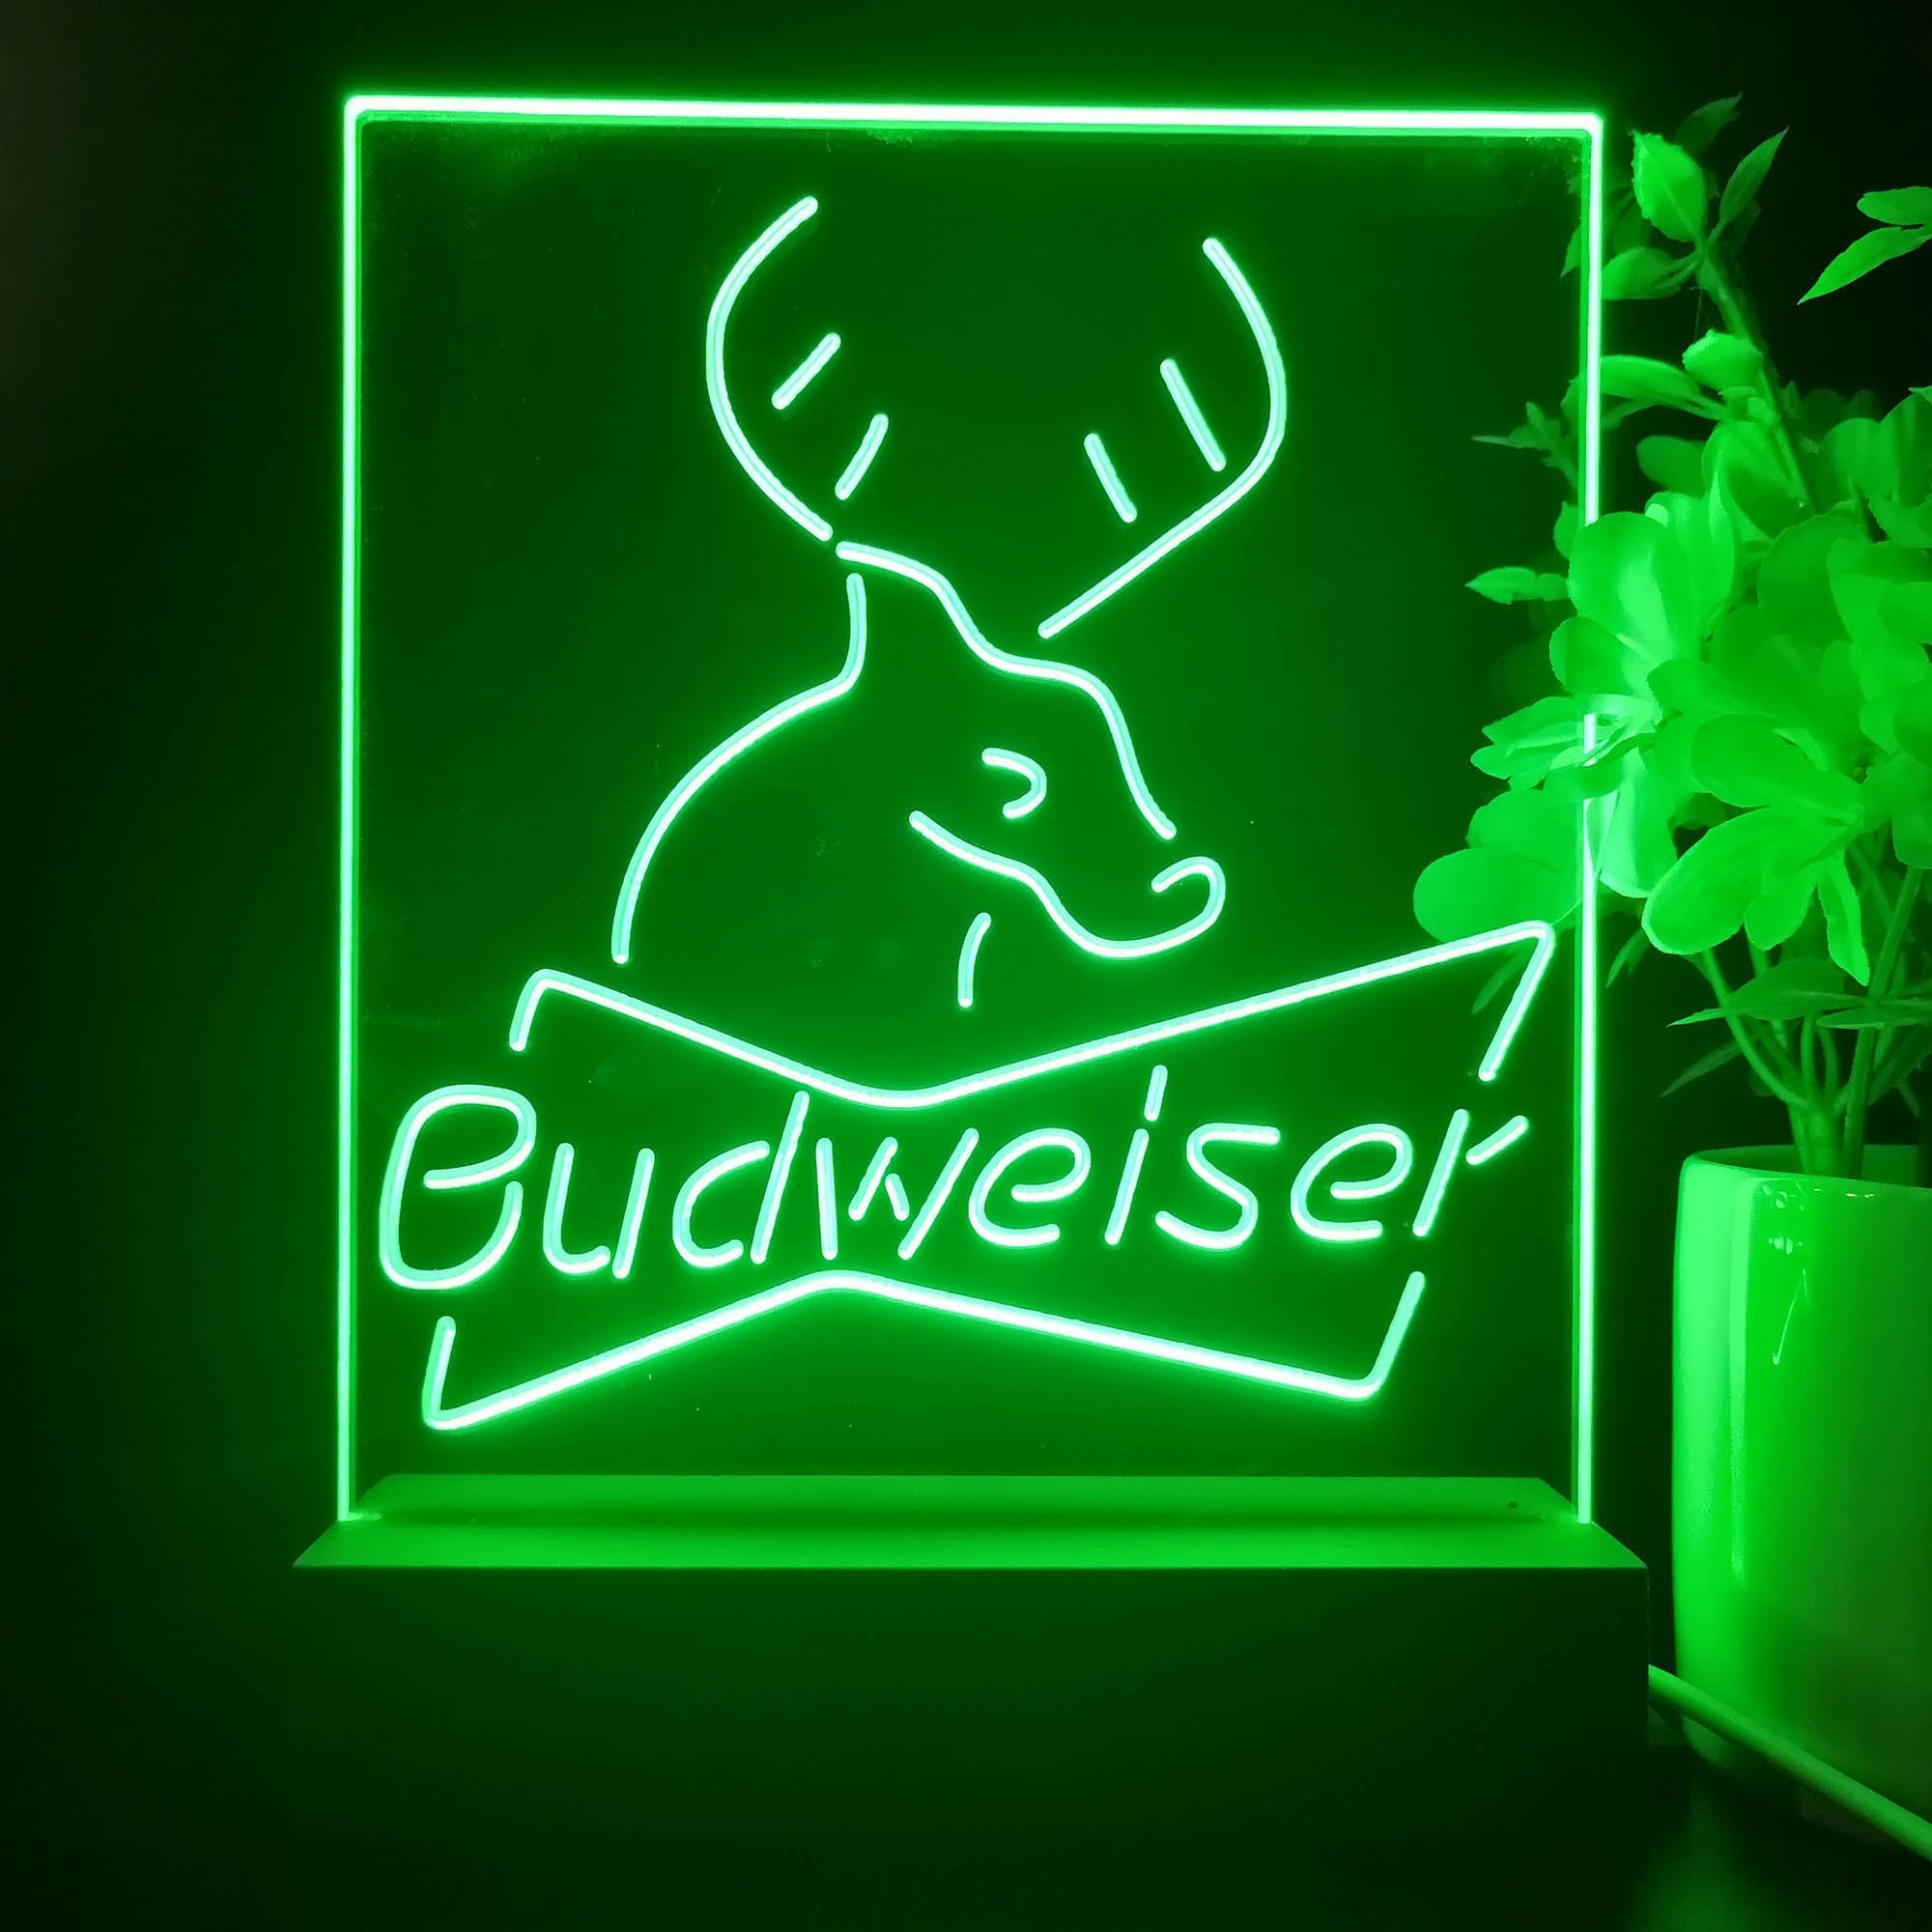 Budweiser Deer Hunting Cabin Night Light Neon Pub Bar Lamp